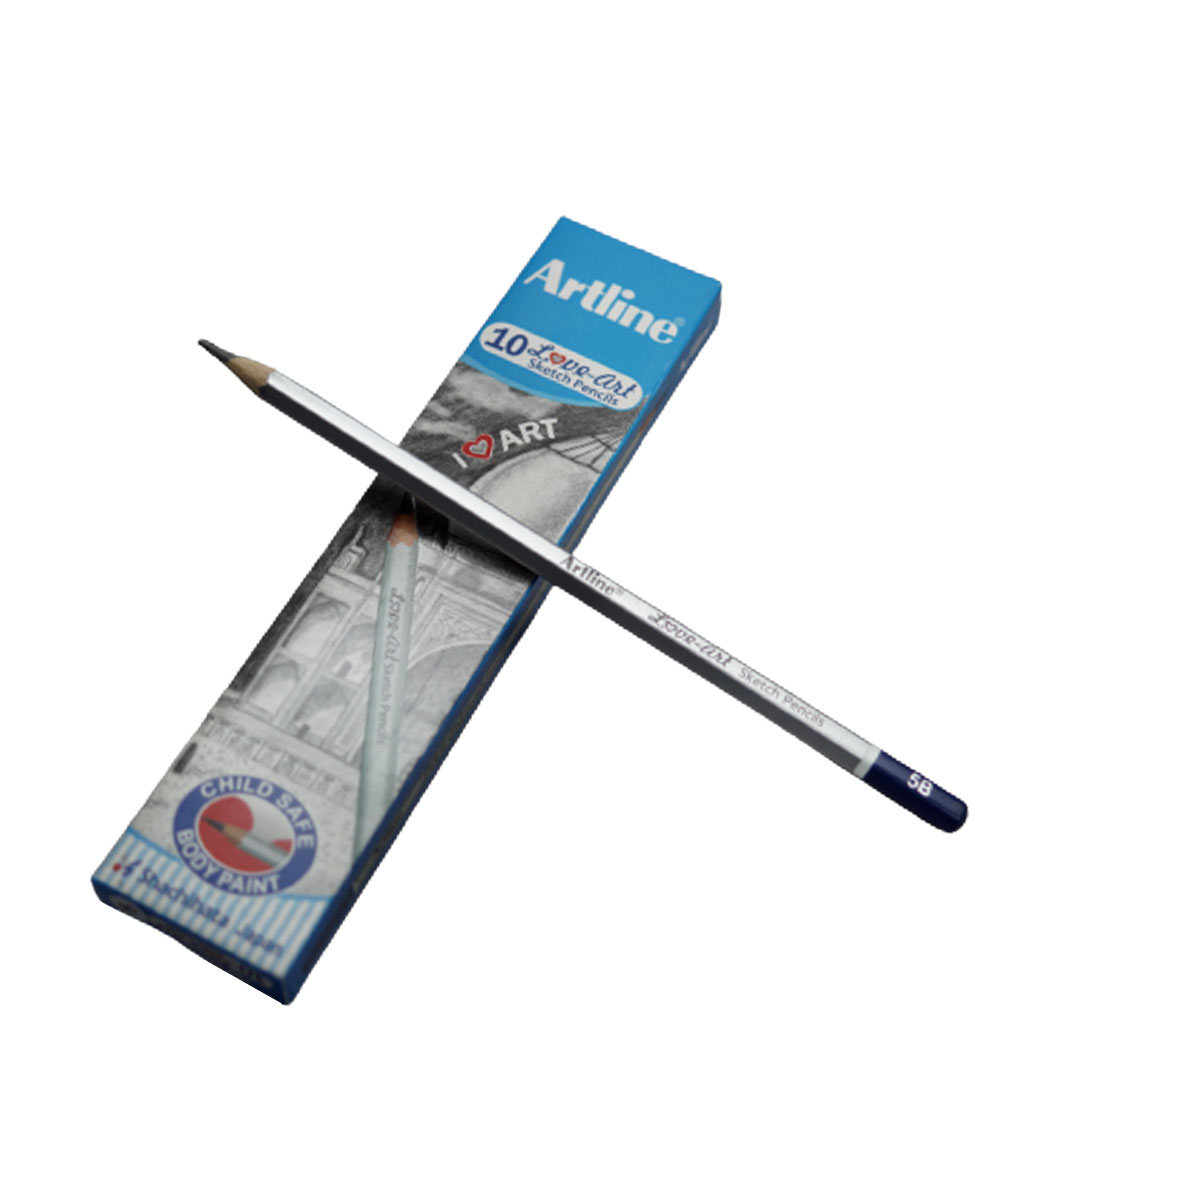 Artline HB Sketch Pencils Pack Of 20 Pencils Buy Online